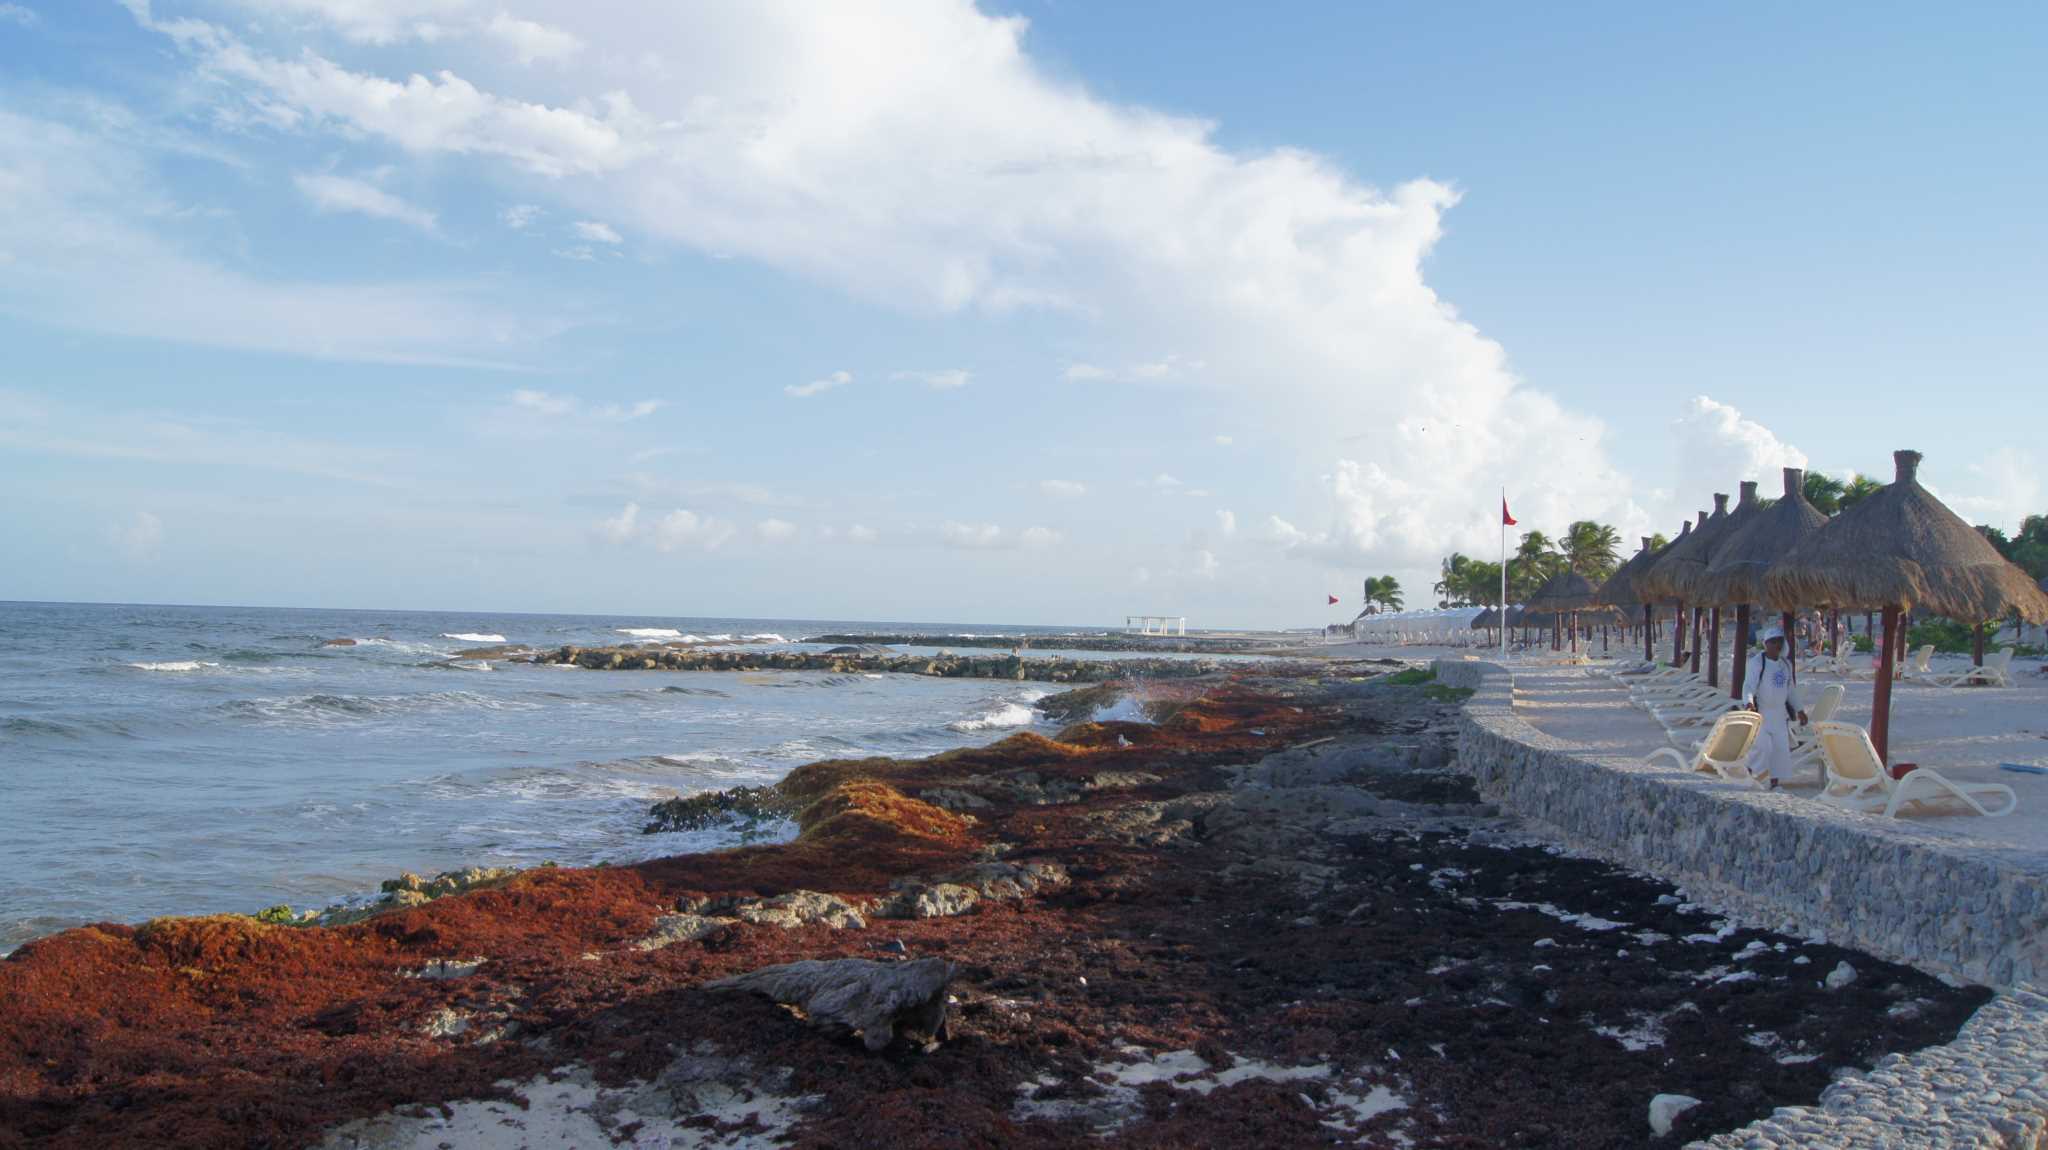 Пляжи Канкуна наводнены водорослями Саргасова моря (Bahia Principe - daily seaweed harvest)